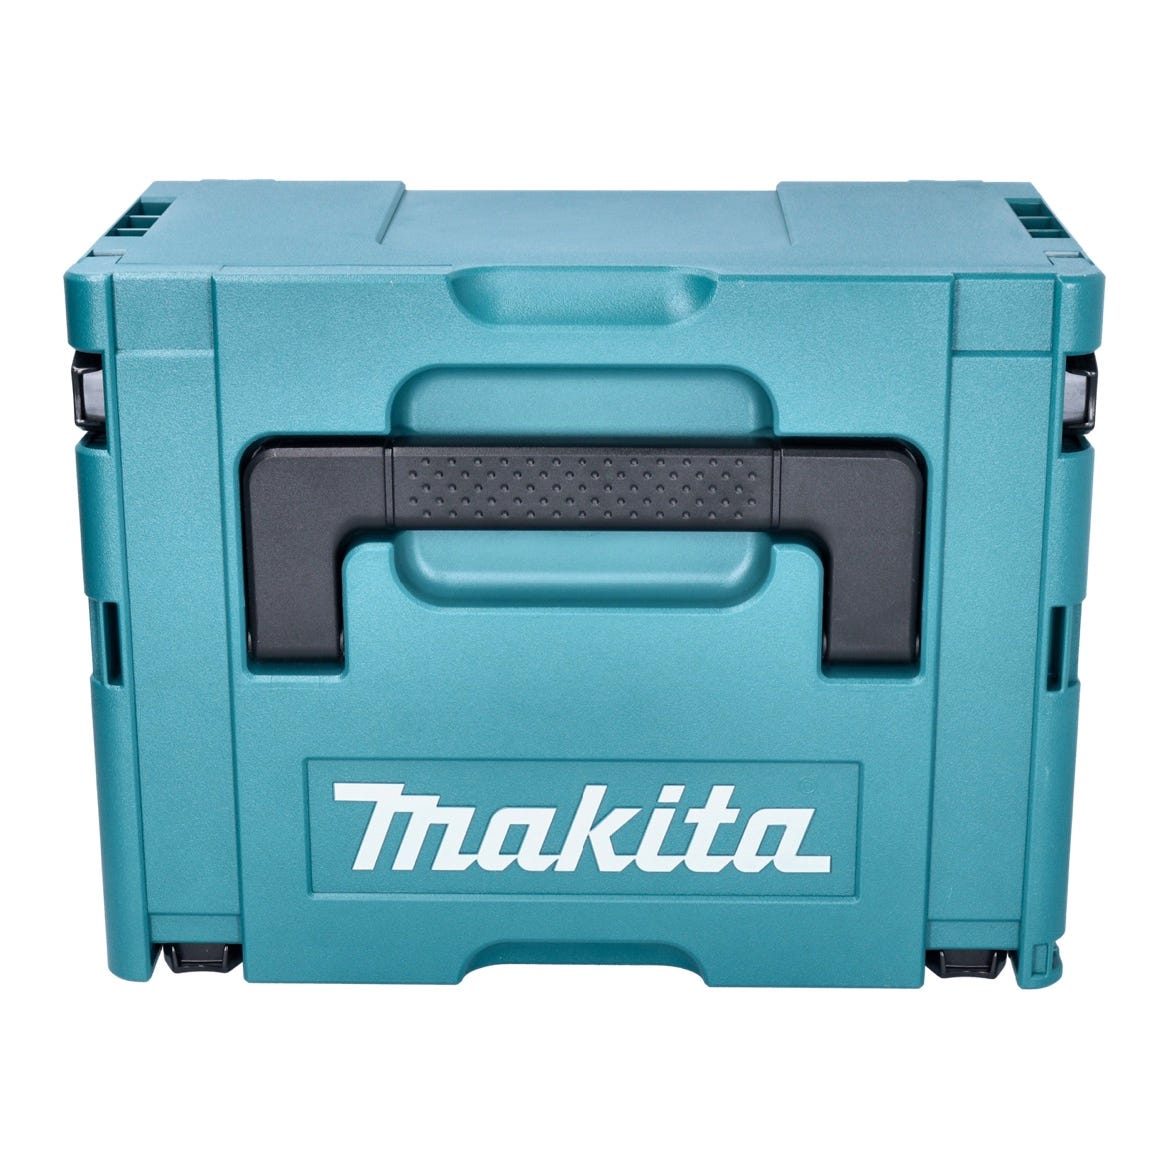 Makita DJV185RMJ Scie sauteuse sans fil 18V Brushless + 2x Batteries 4,0Ah + Chargeur + Coffret Makpac 2